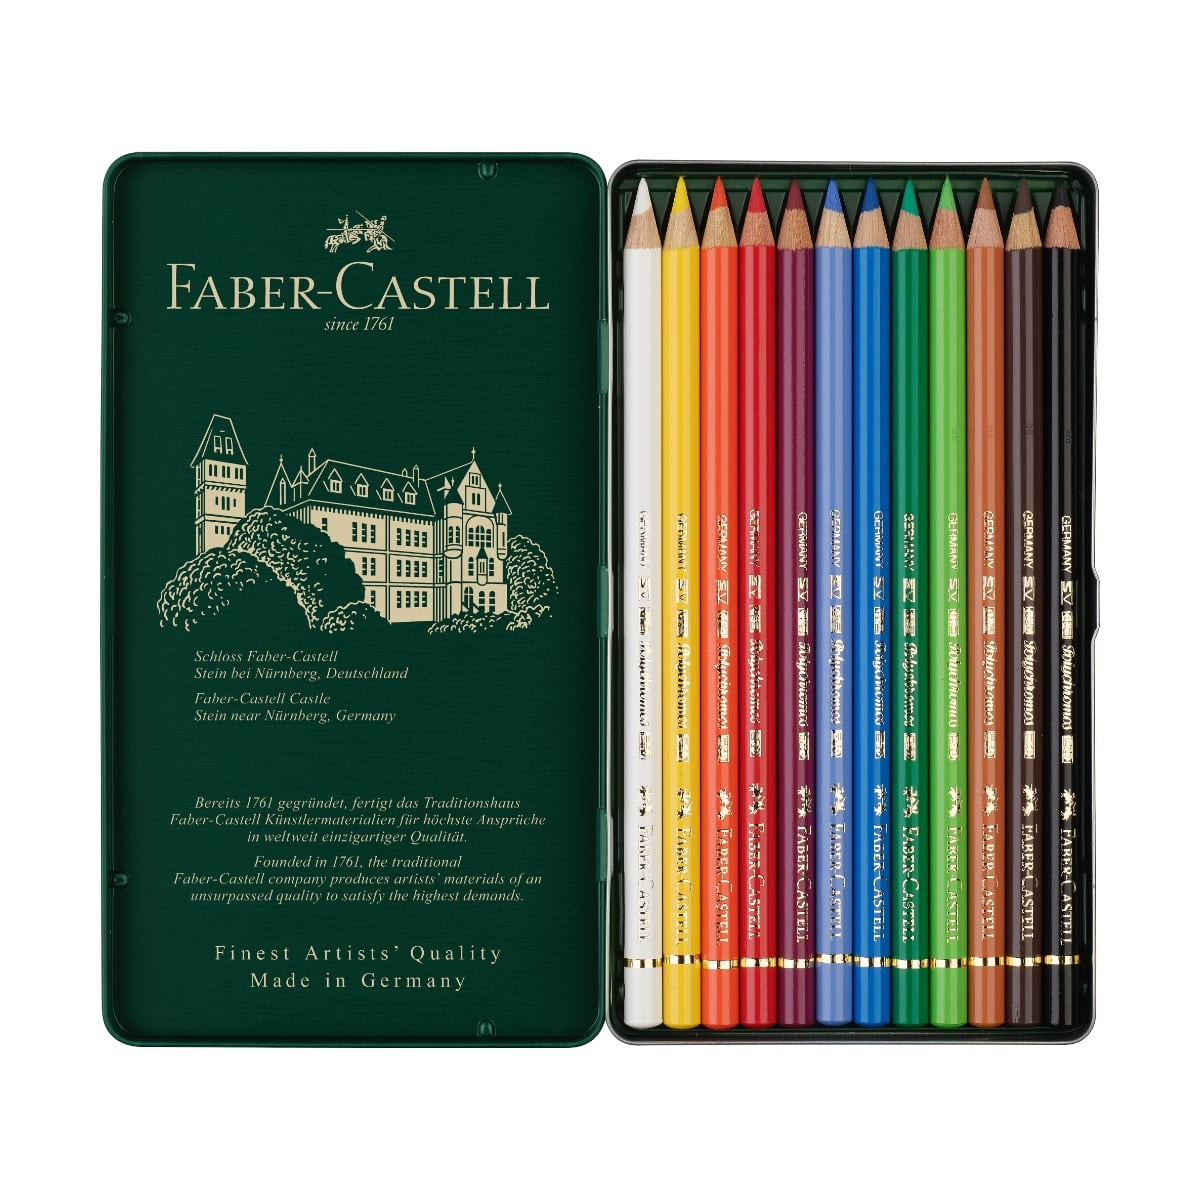 Faber-Castell Ξυλομπογιές Polychromos Μεταλλική Κασετίνα 12 χρωμάτων